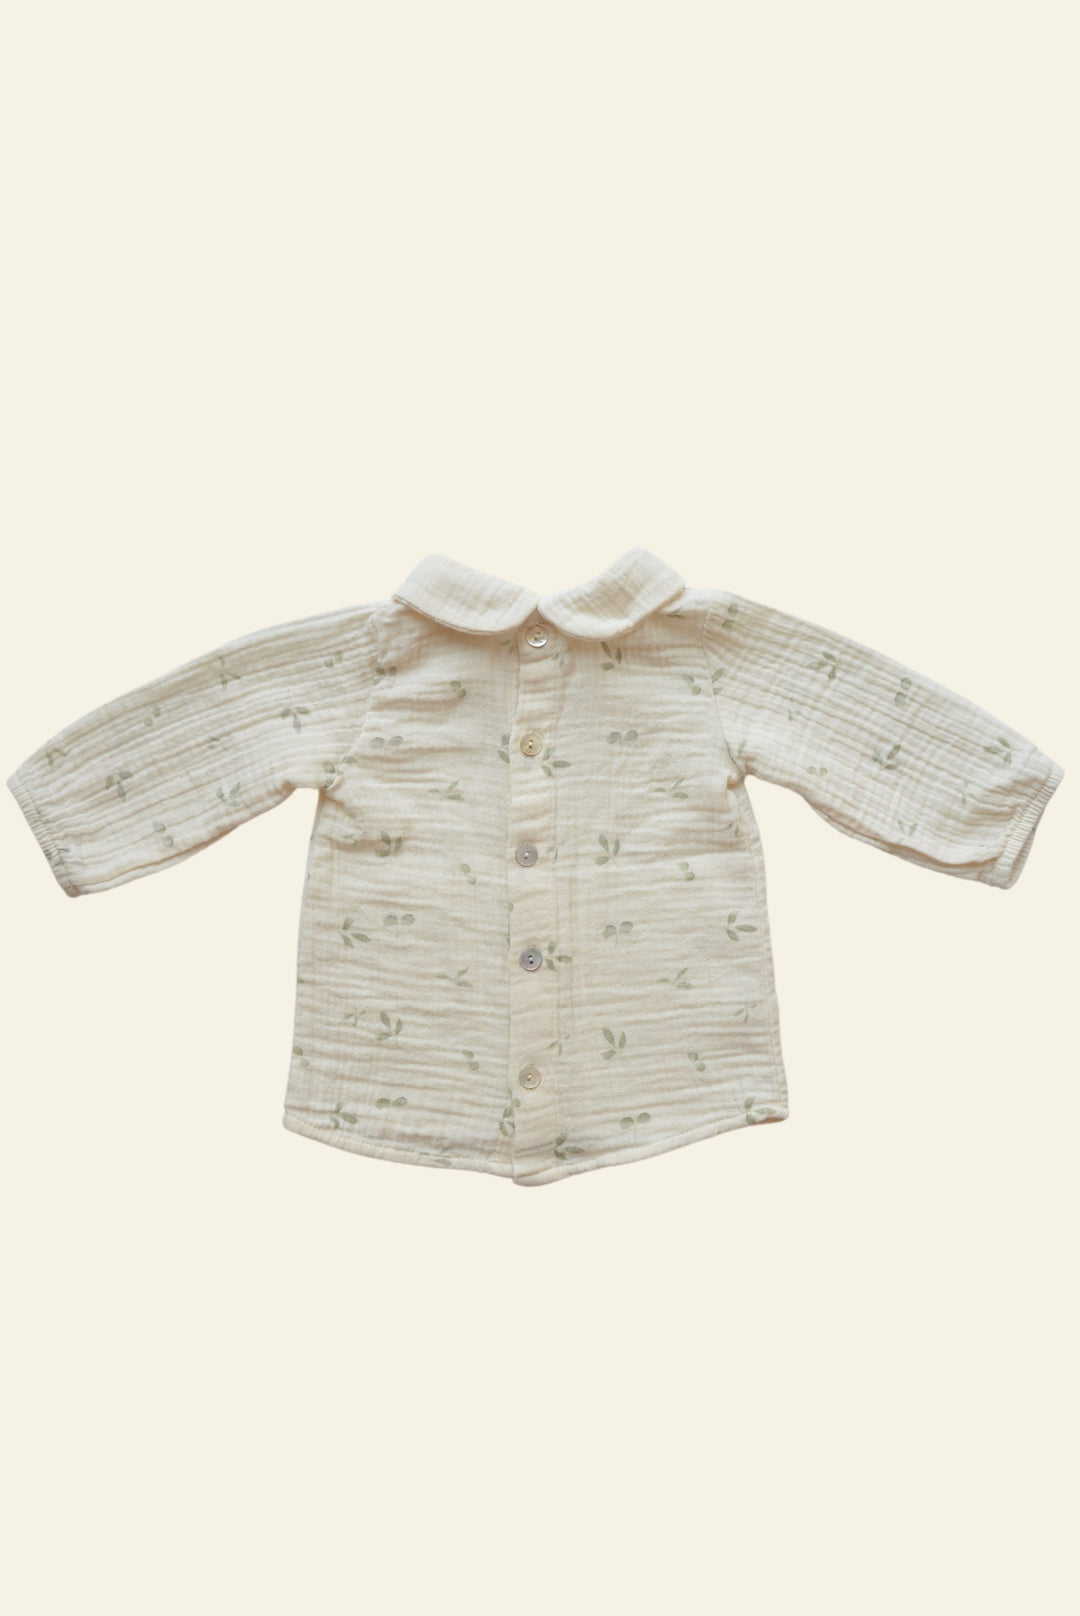 Baby girl muslin blouse 100% cotton